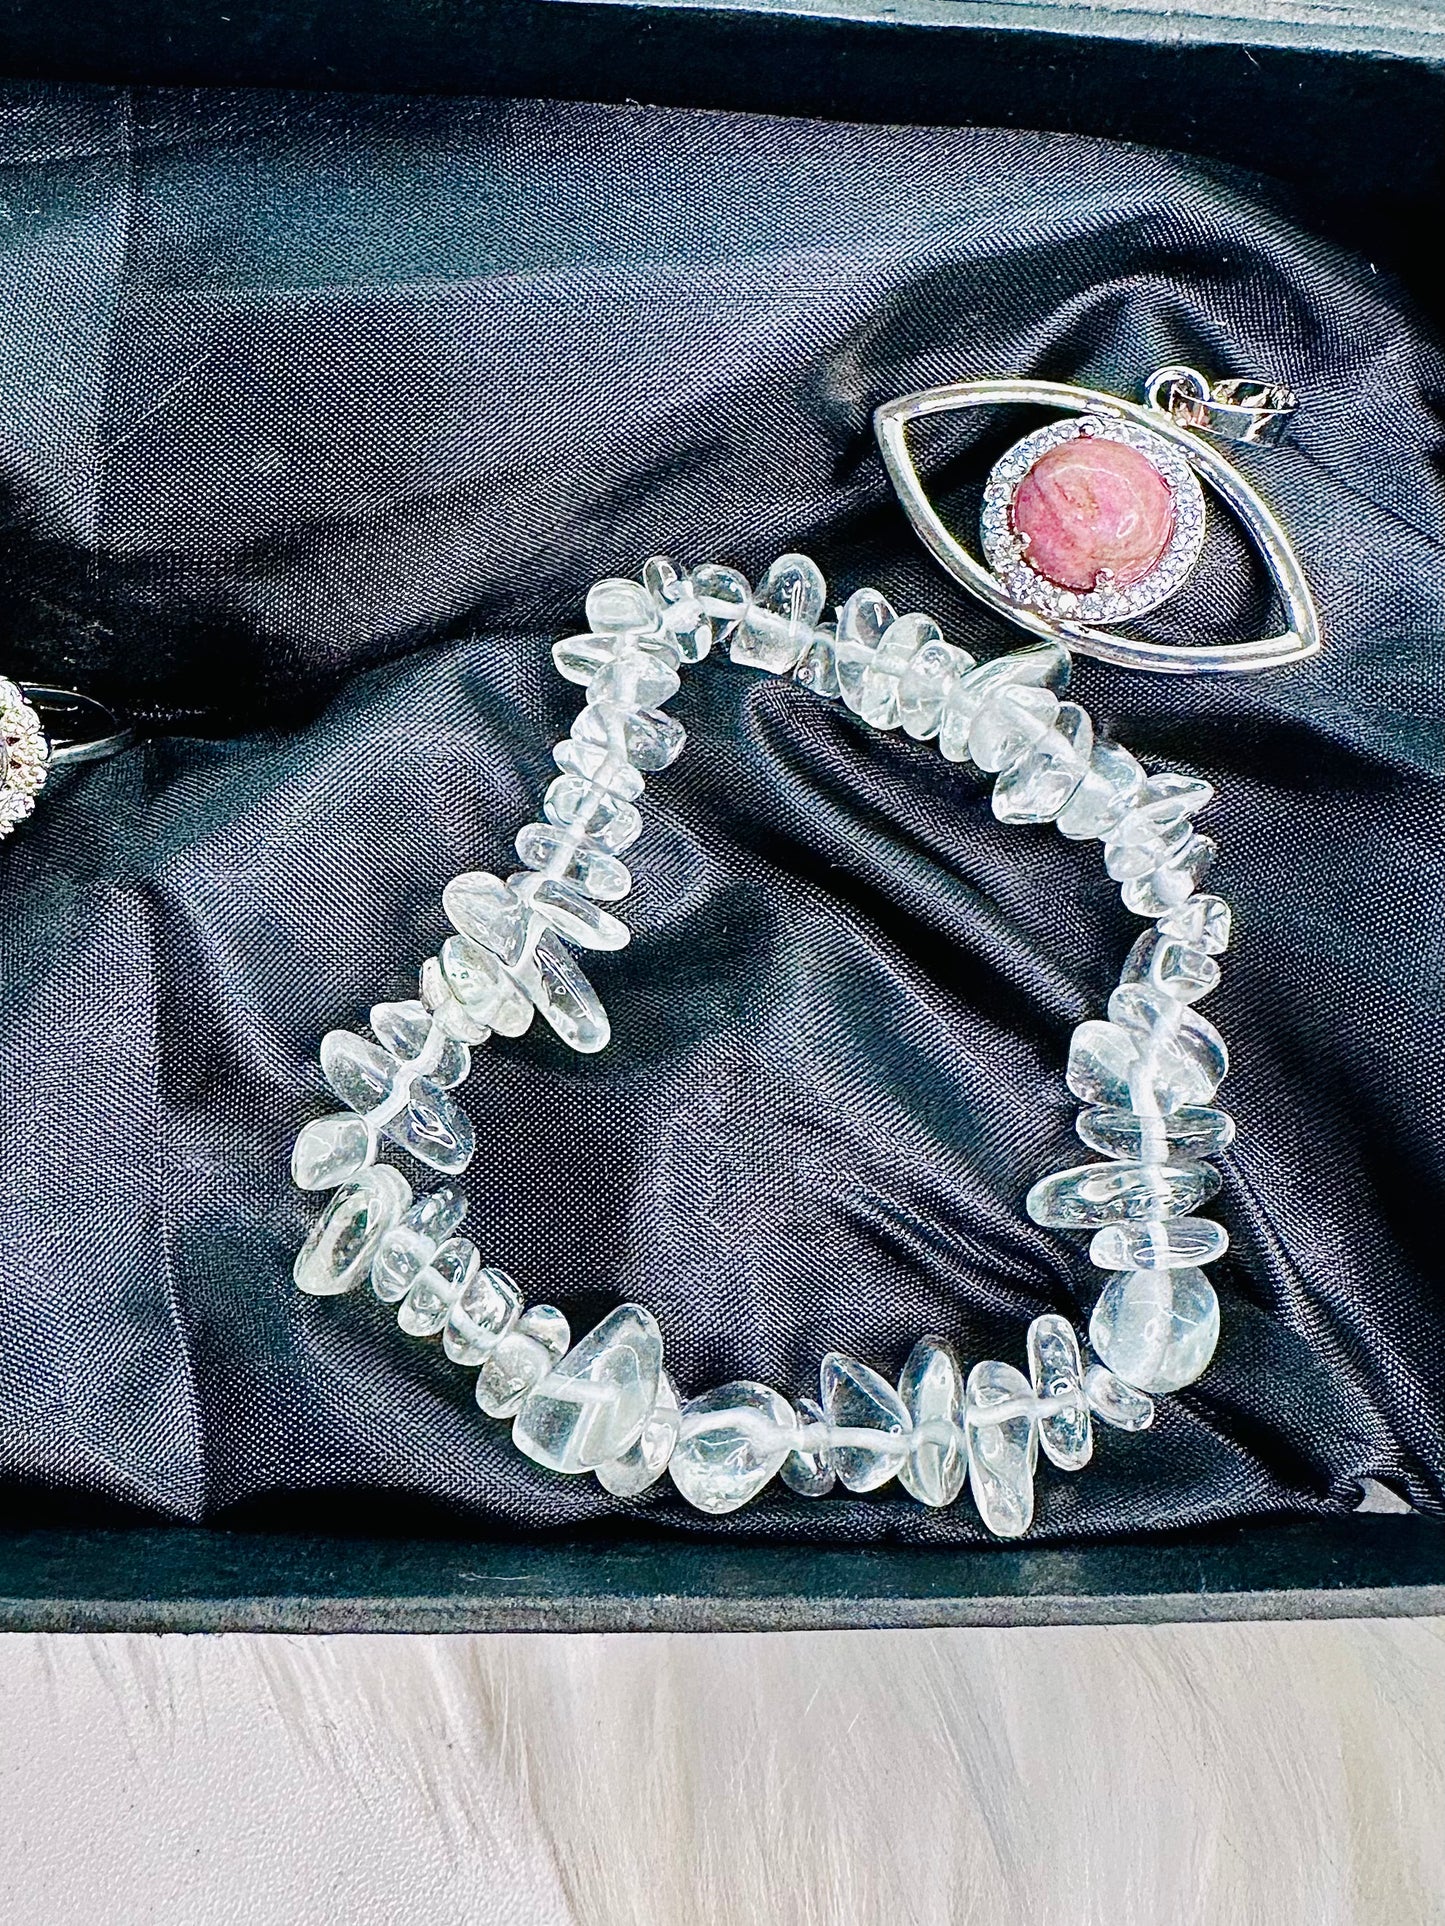 ⚜️ SALE ⚜️ Beautiful Jewellery Gift Box - Stunning Adjustable Charoite Silver Ring, Peach Moonstone Evil Eye Protector Pendant, Rose Quartz Key Ring & Clear Quartz Bracelet